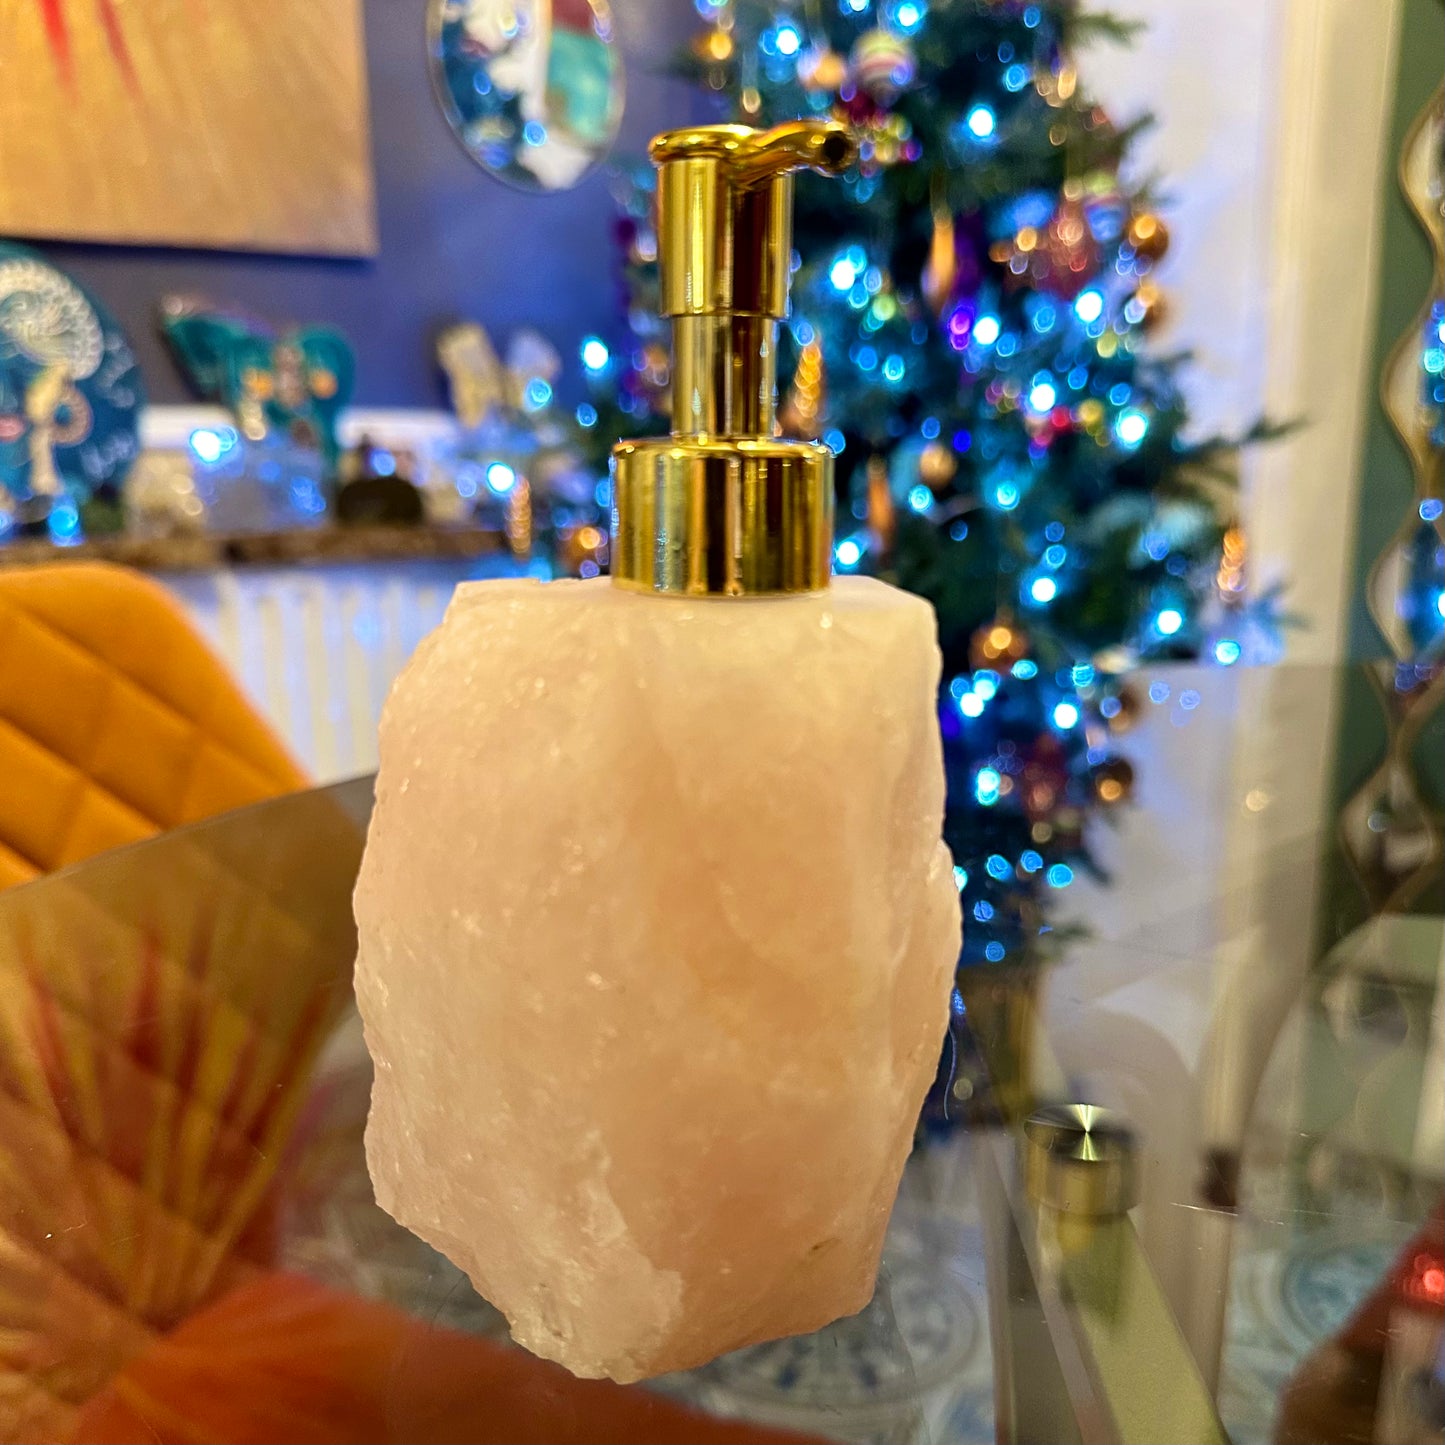 Rose Quartz Stone Soap Dispenser